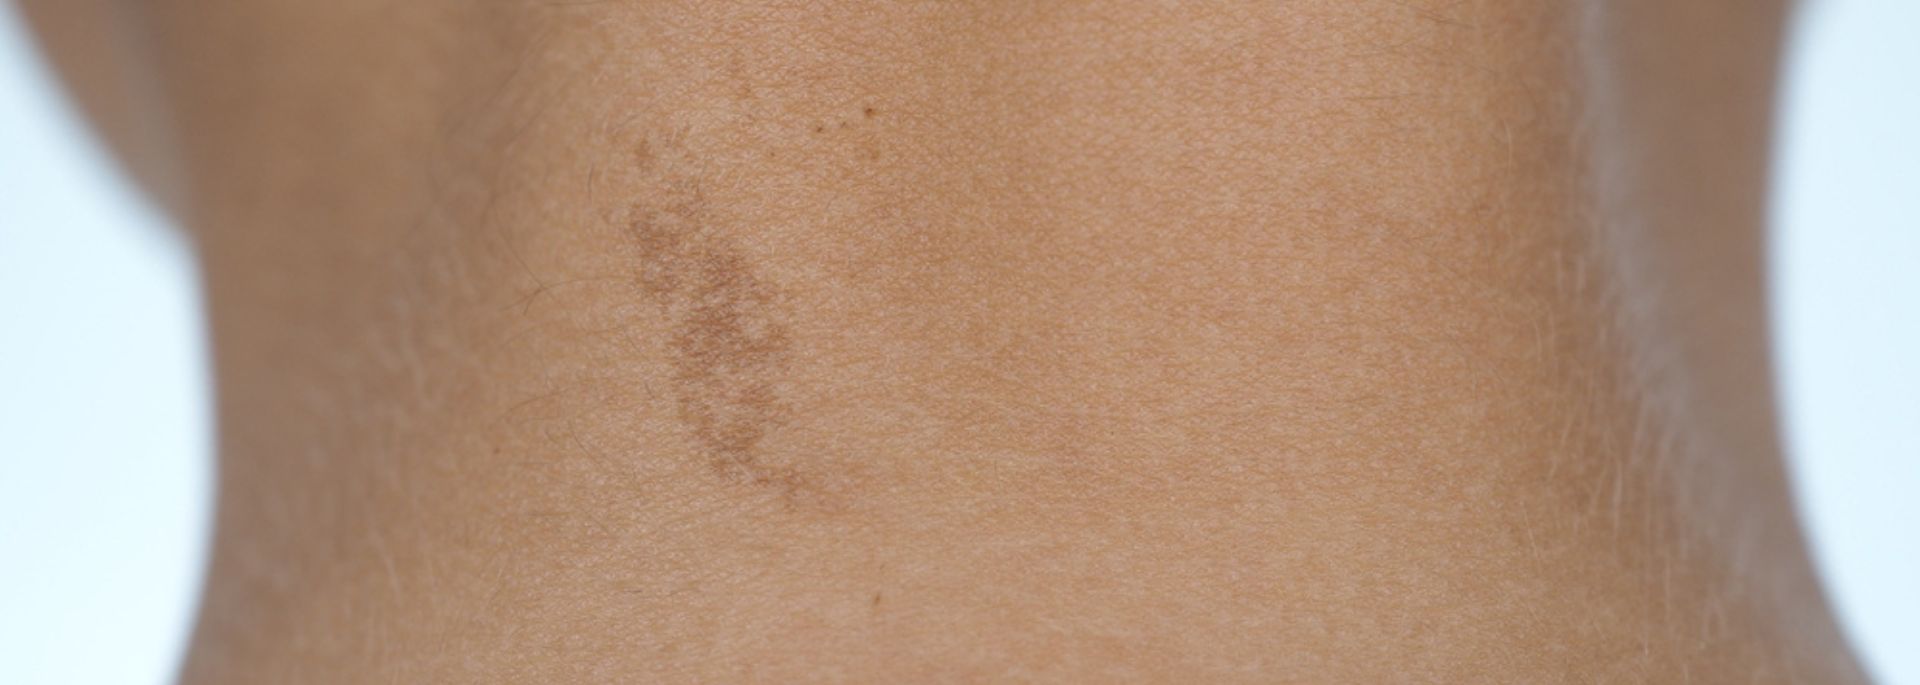 Cafe au lait birthmark on the back of a neck - How we remove cafe au lait birthmark